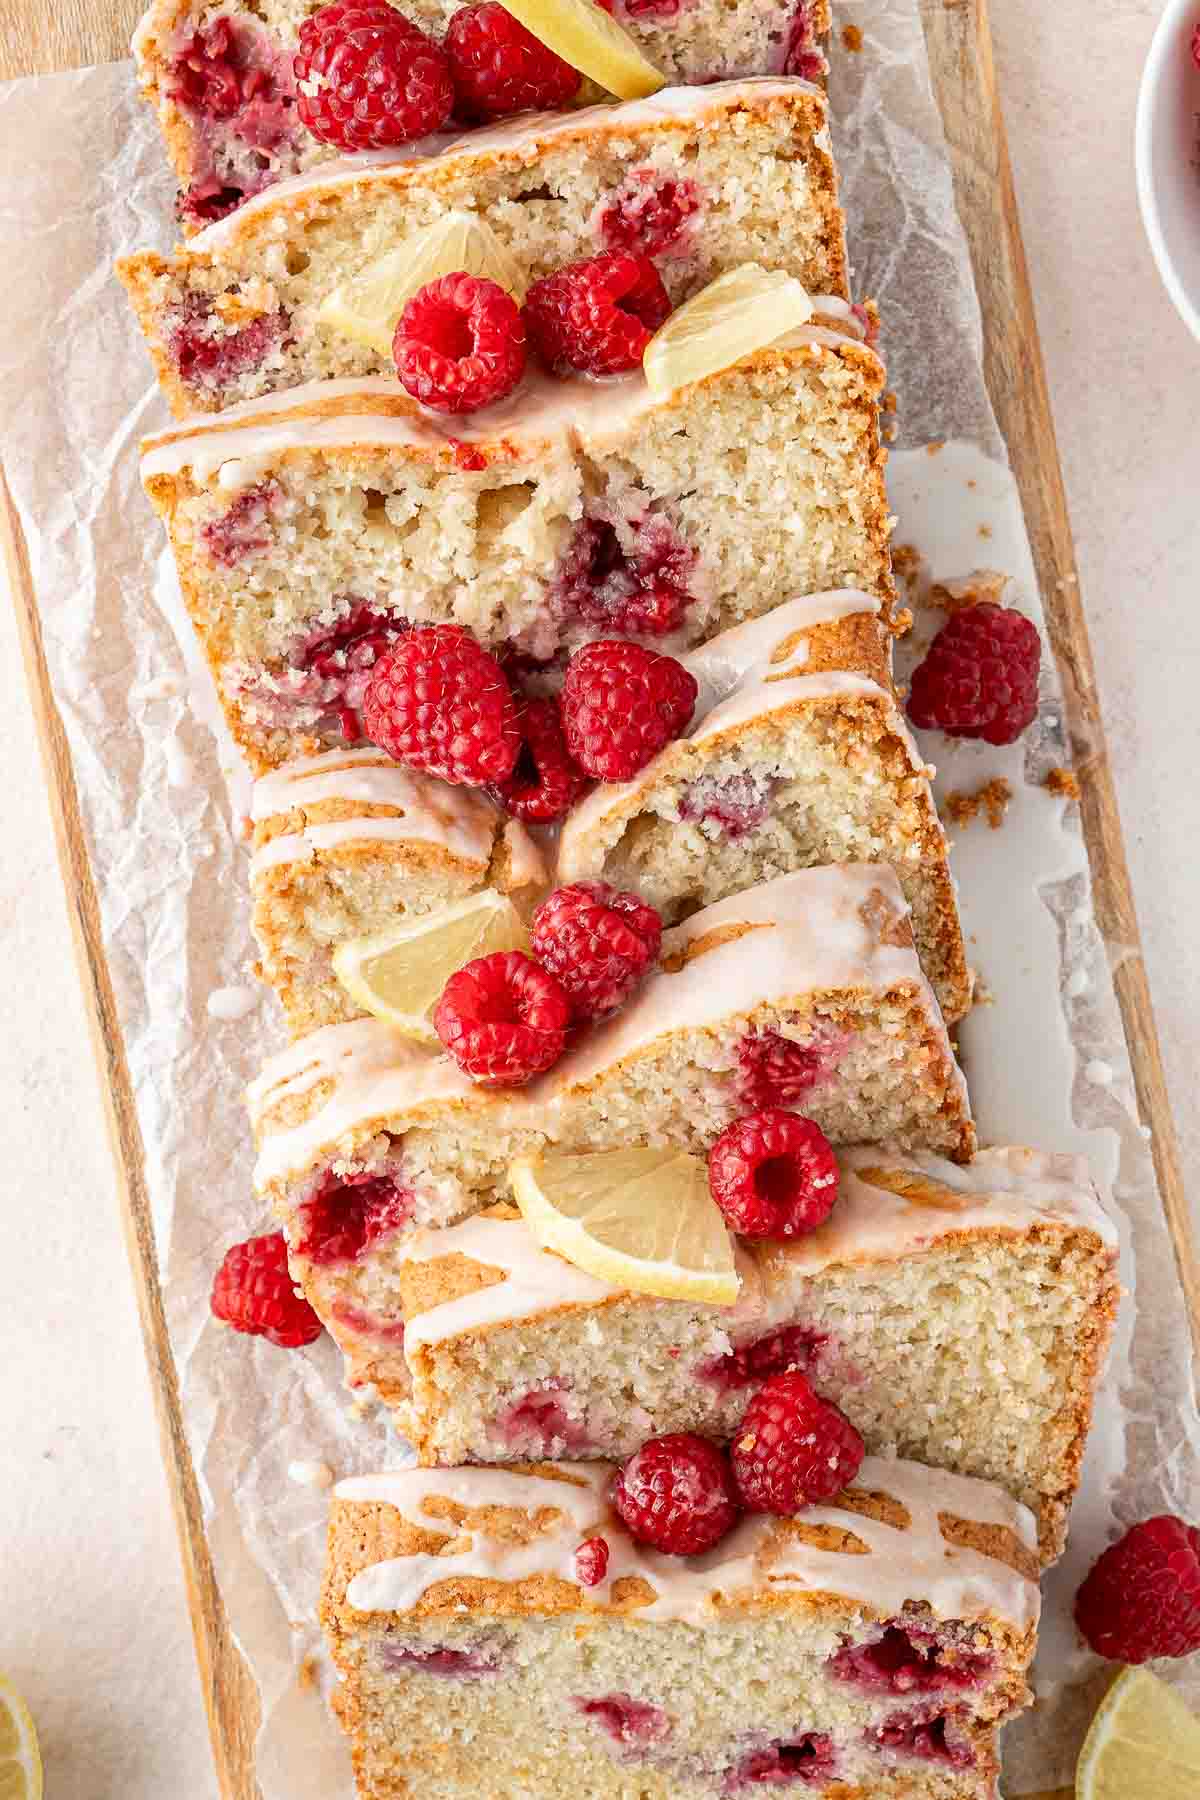 Vegan raspberry and lemon cake slices up ready to serve.